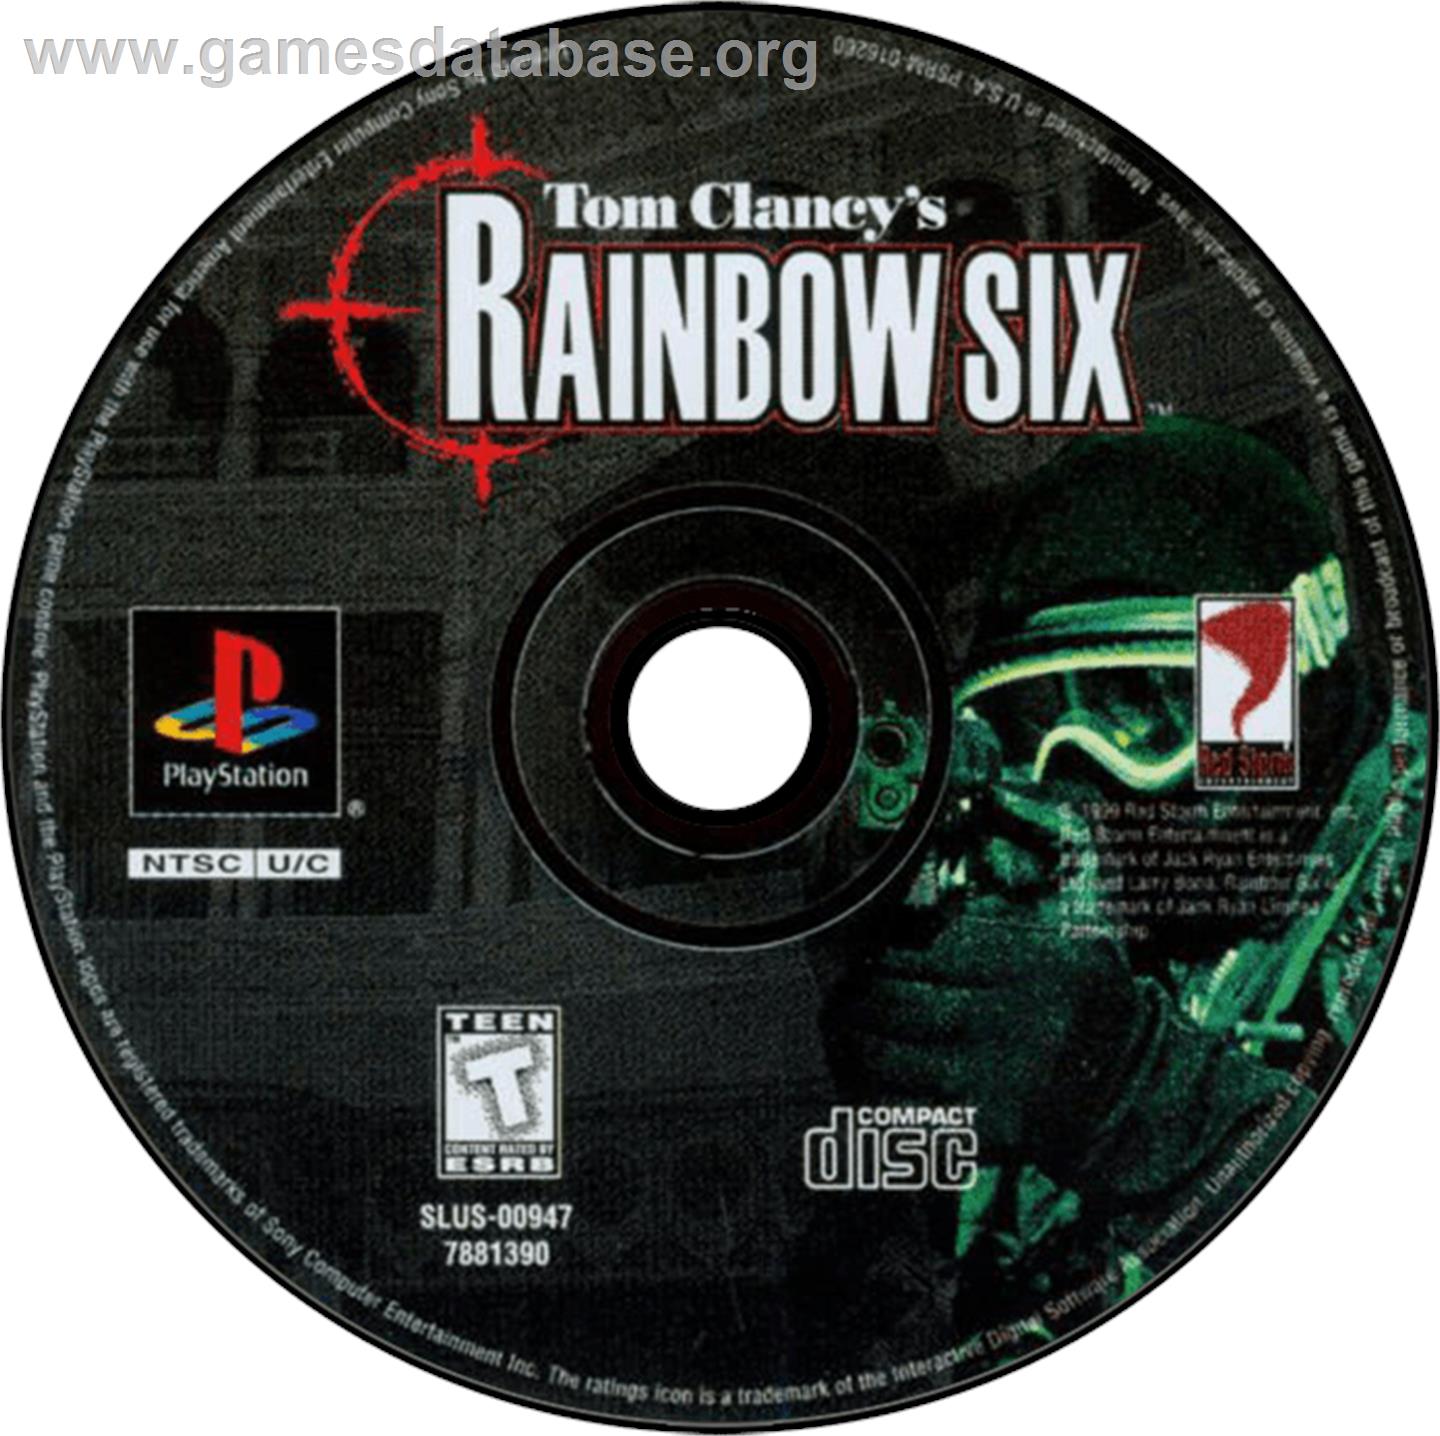 Tom Clancy's Rainbow Six: Rogue Spear - Sony Playstation - Artwork - Disc